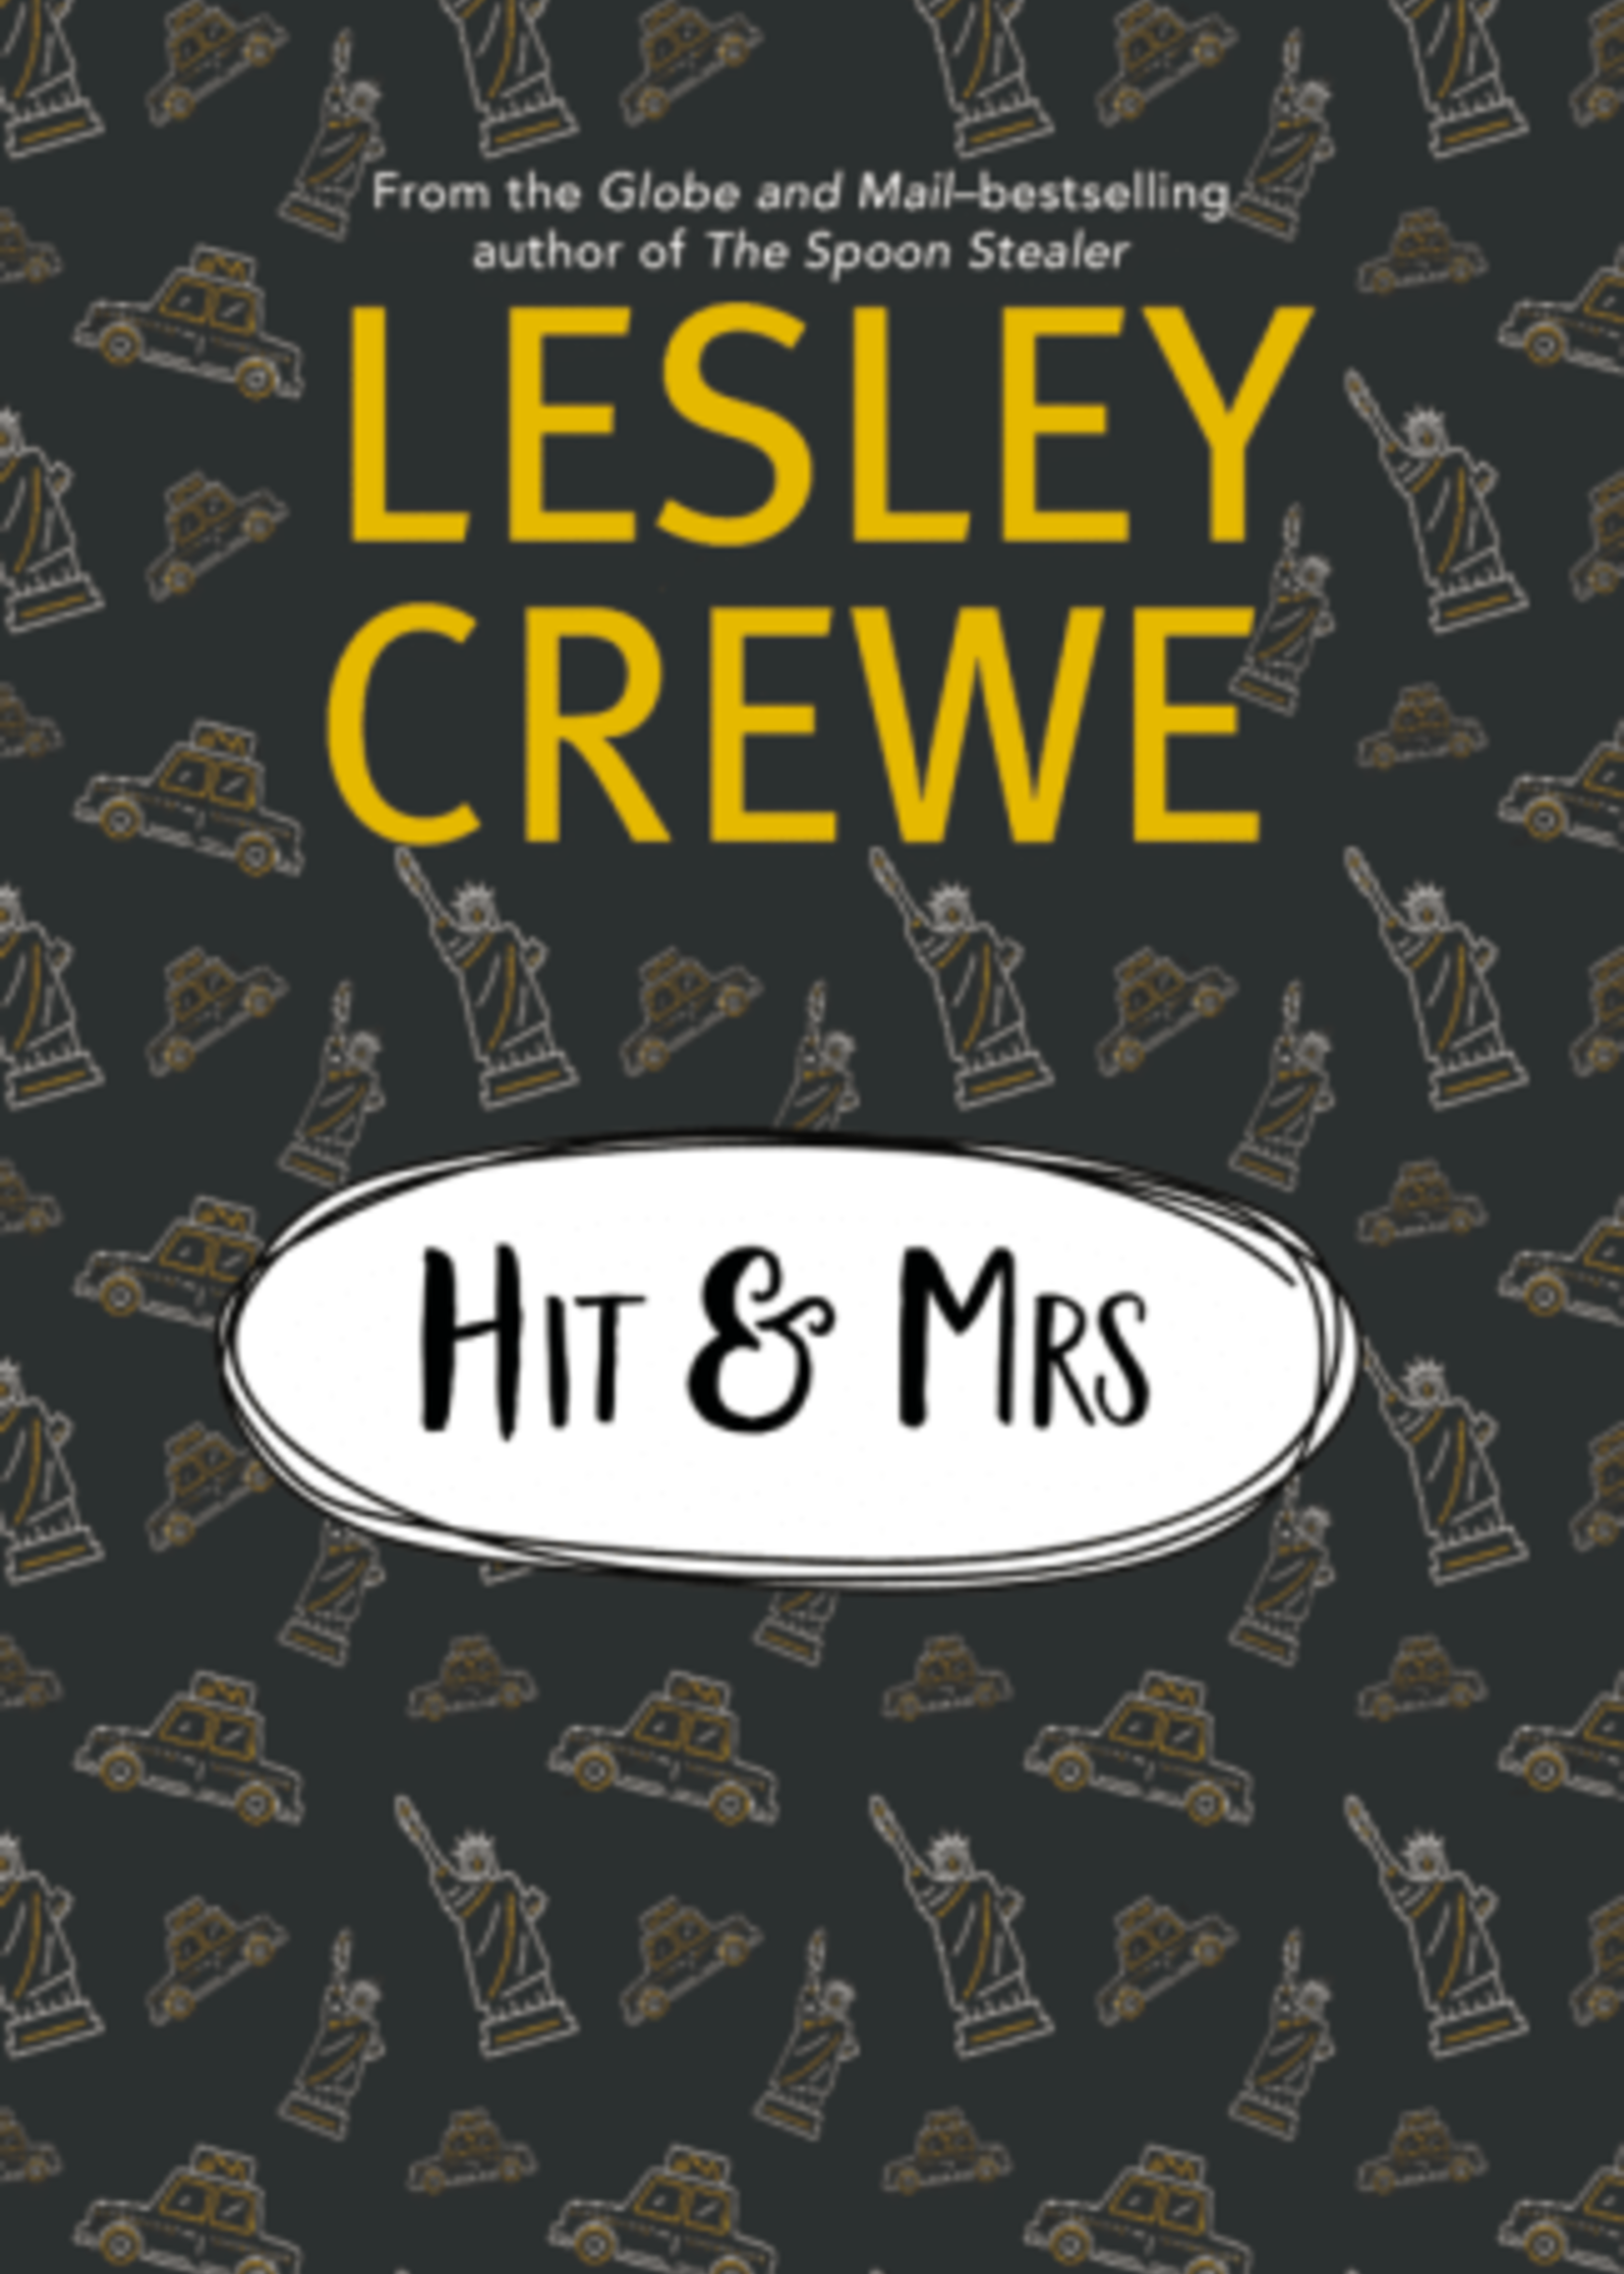 Hit & Mrs. by Lesley Crewe